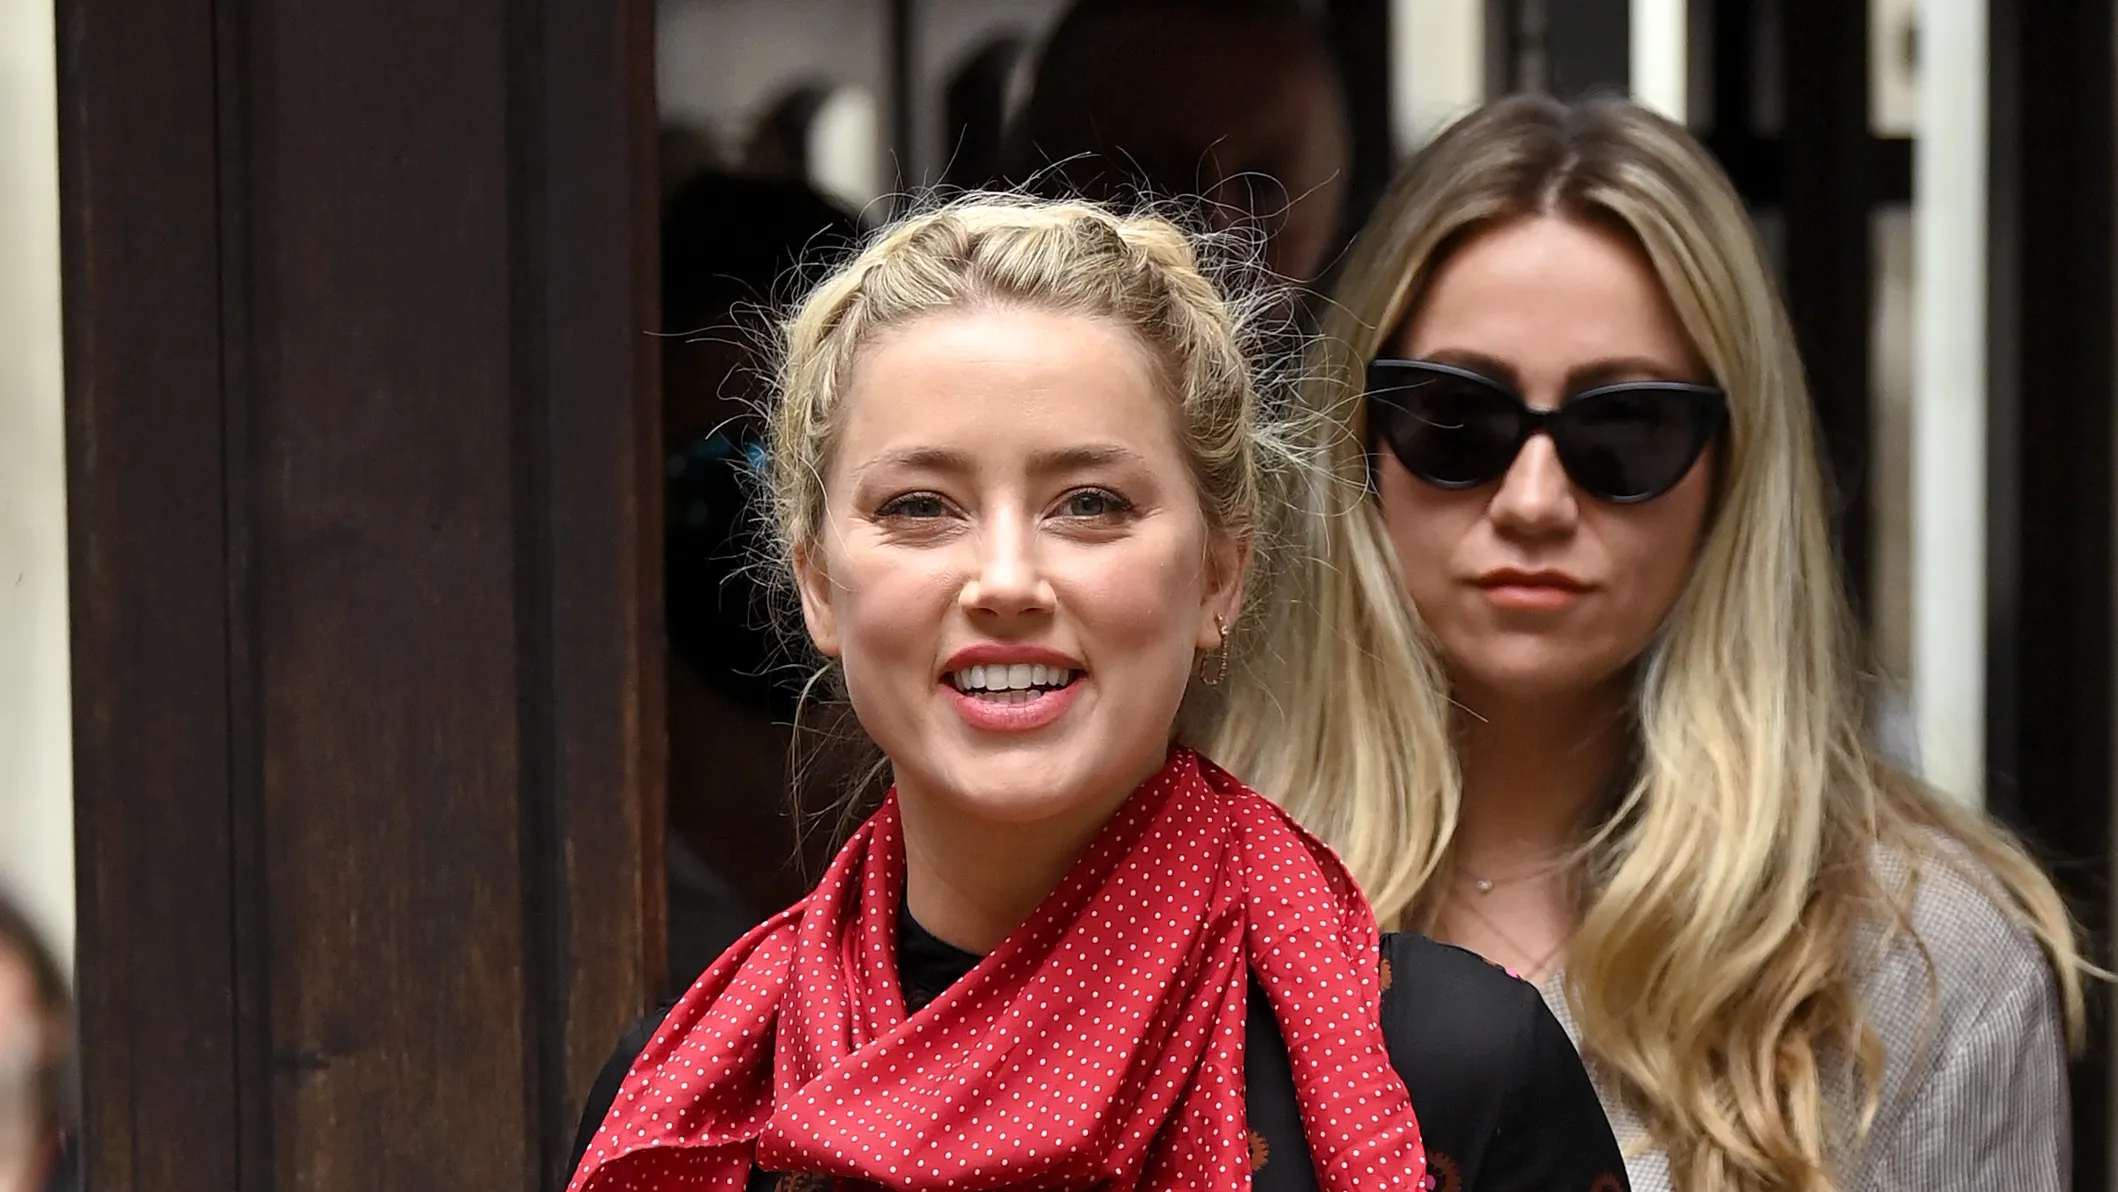 Amber Heard against Johnny Depp in defamation trial